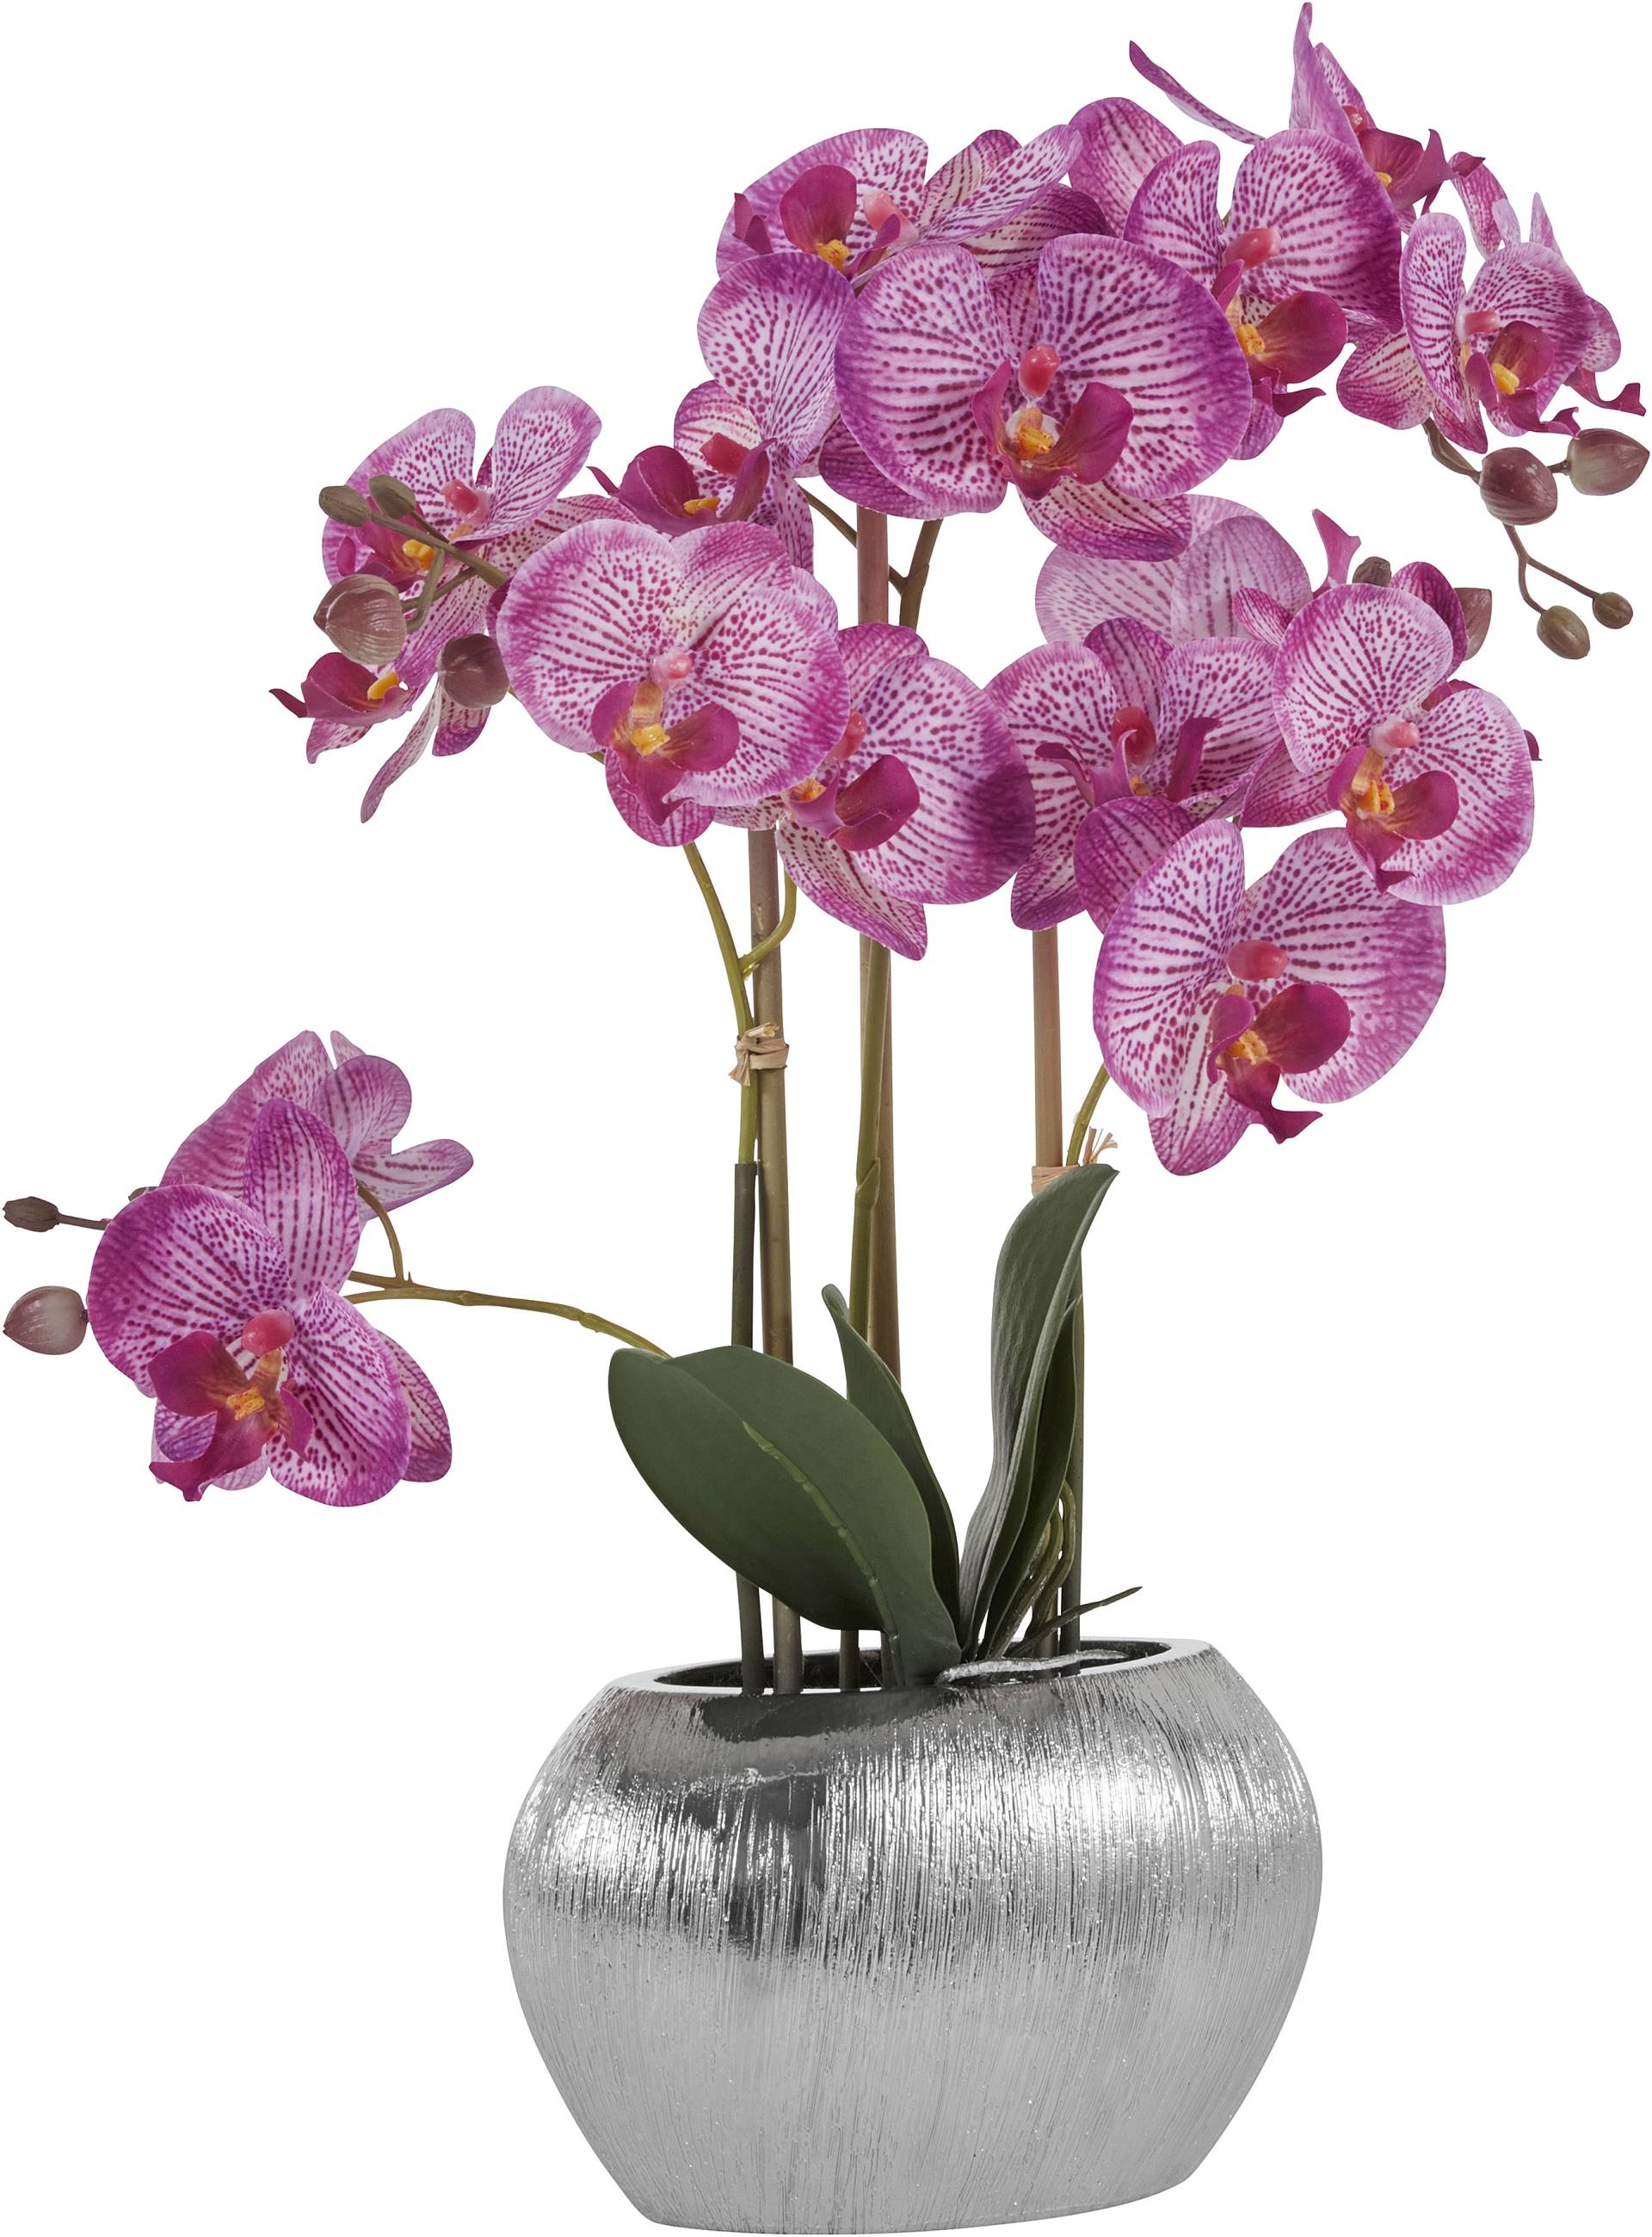 Home affaire Kunstpflanze "Orchidee", Kunstorchidee, im Topf von home affaire